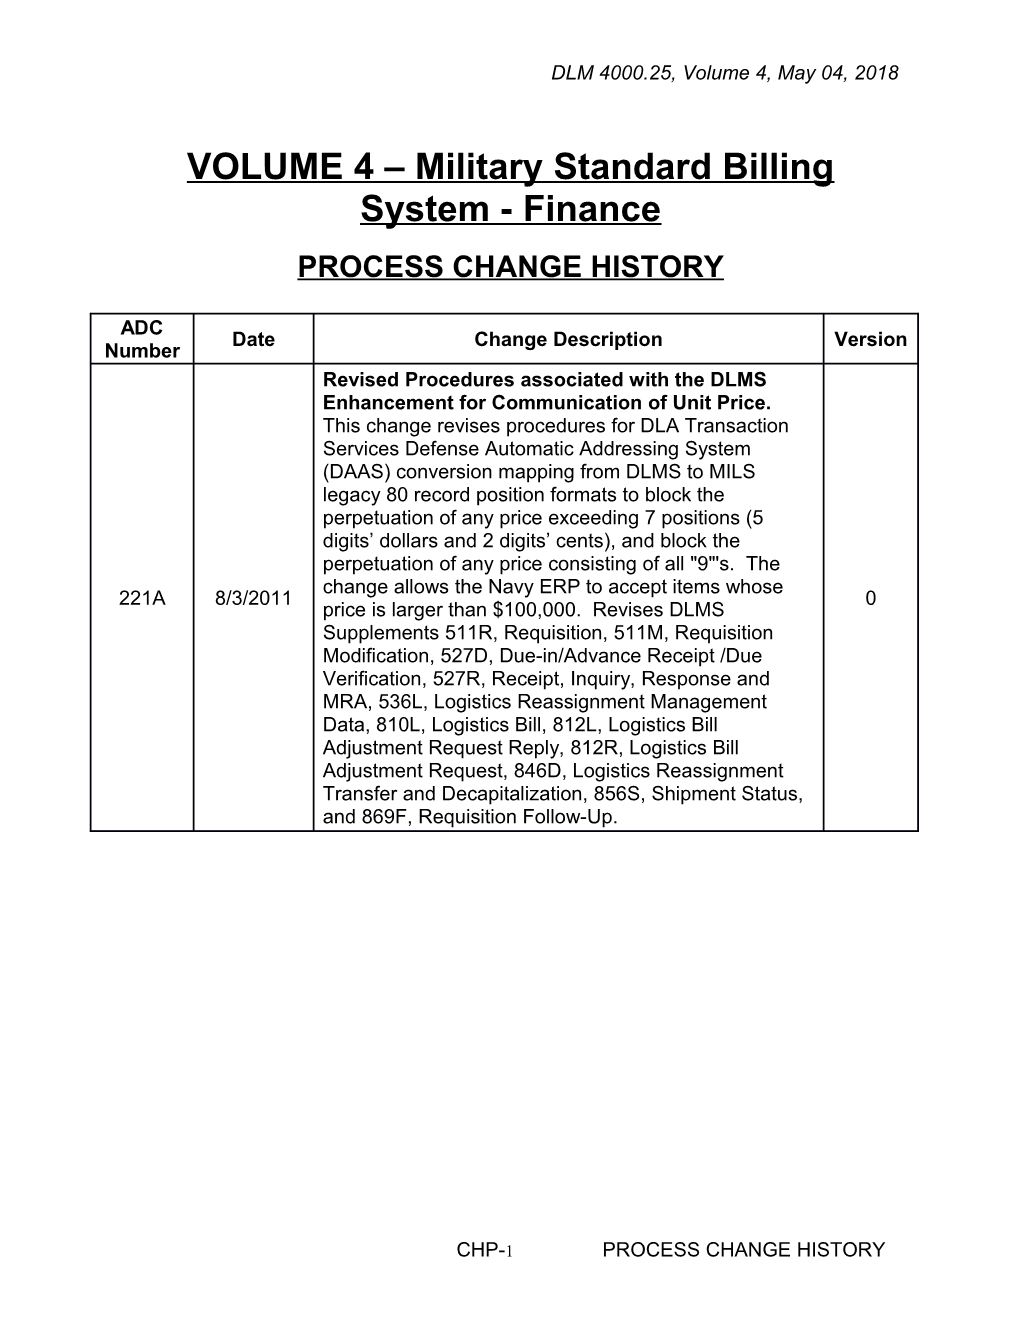 VOLUME 4 Military Standard Billing System - Finance